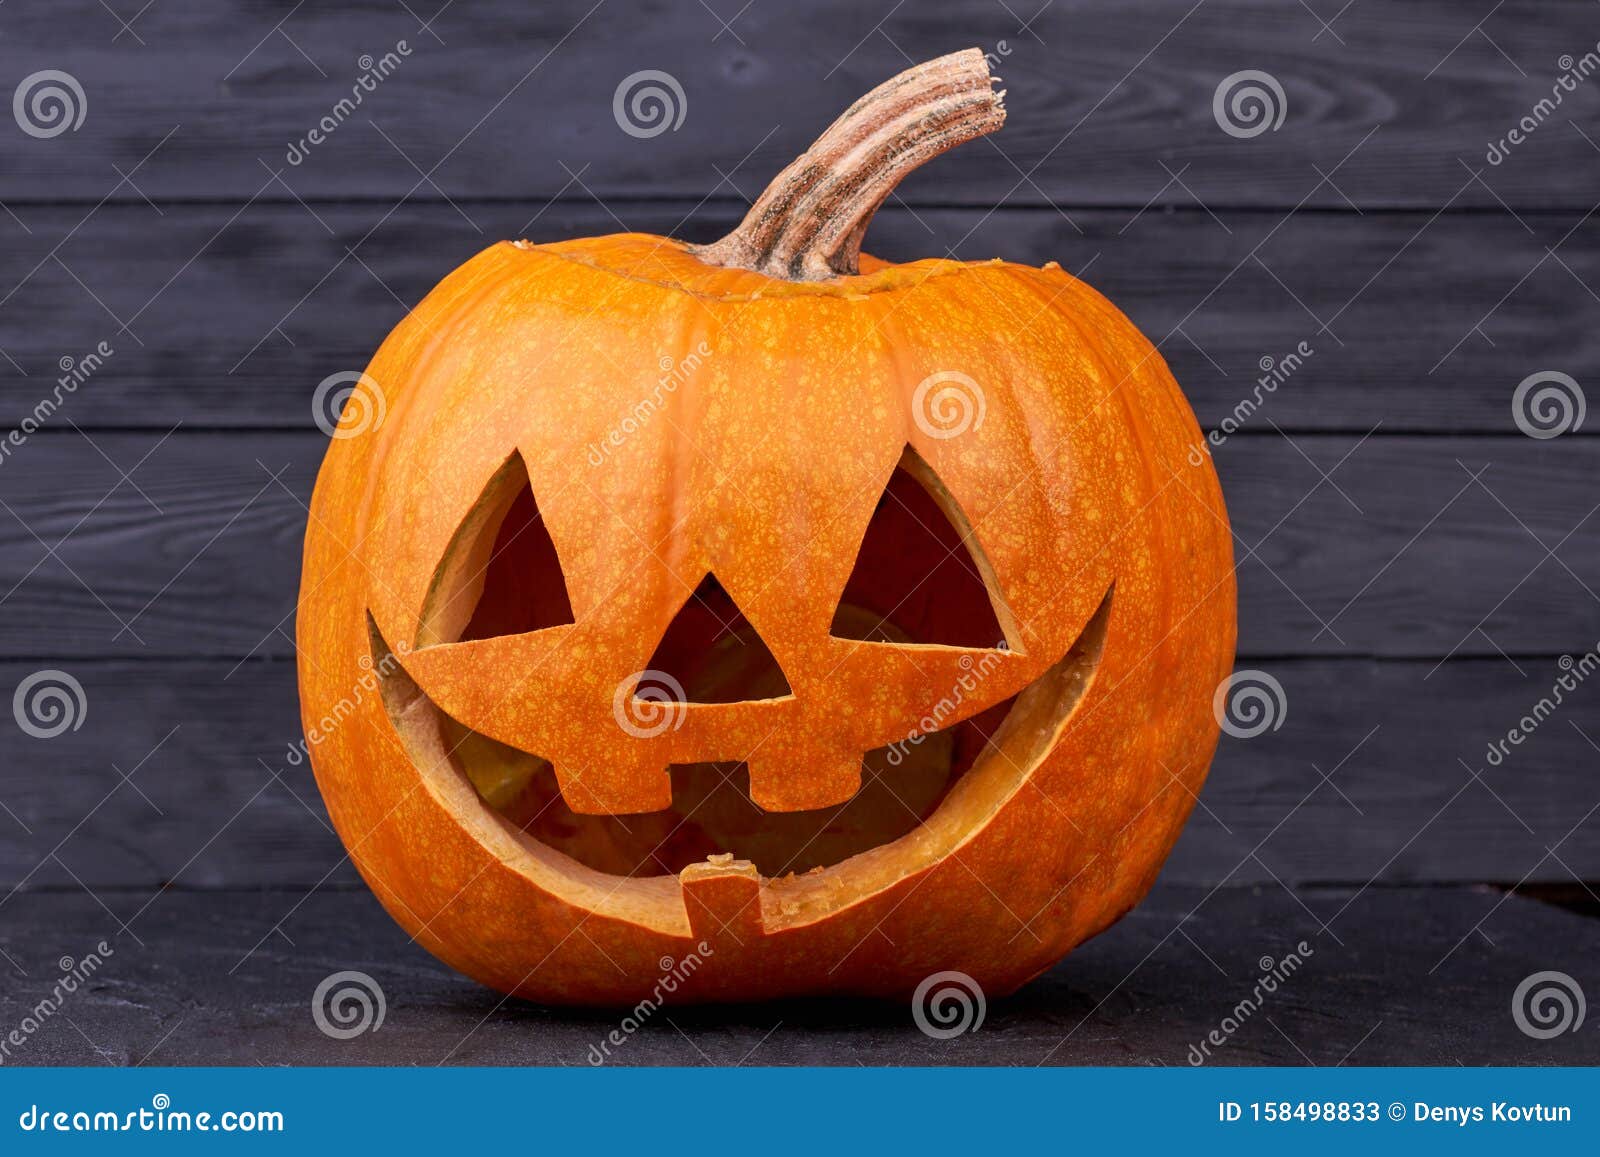 jack o lantern decoration jack o lantern decoration halloween pumpkin dark background easy pumpkin carving ideas halloween 158498833